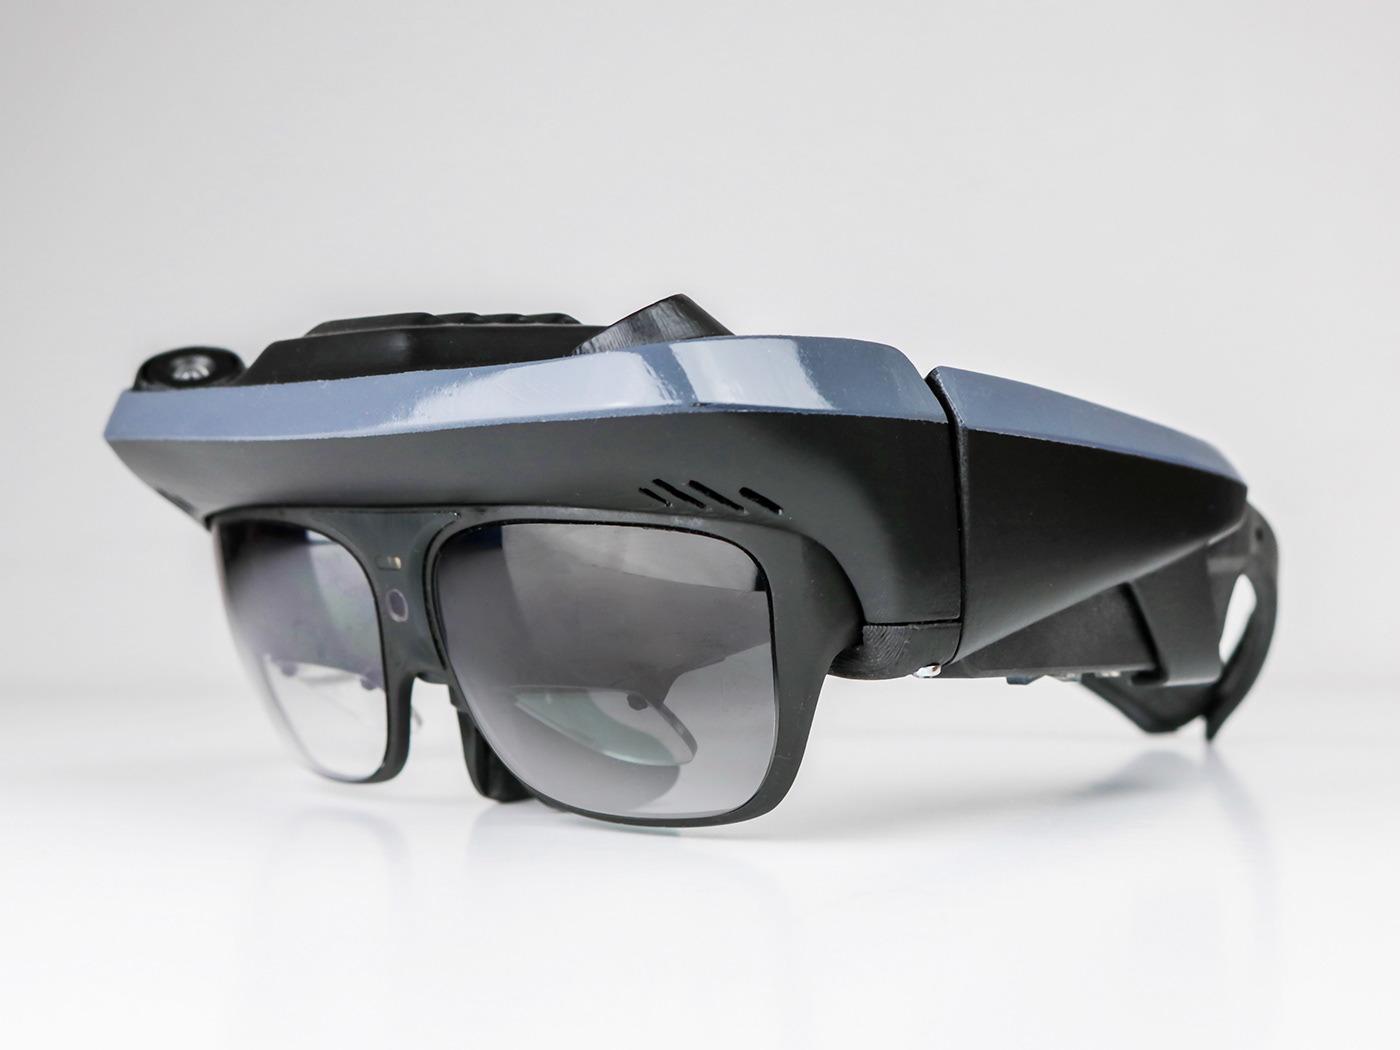 Aircraft glass AR virtual augmented design product Smart smartglass Gadget